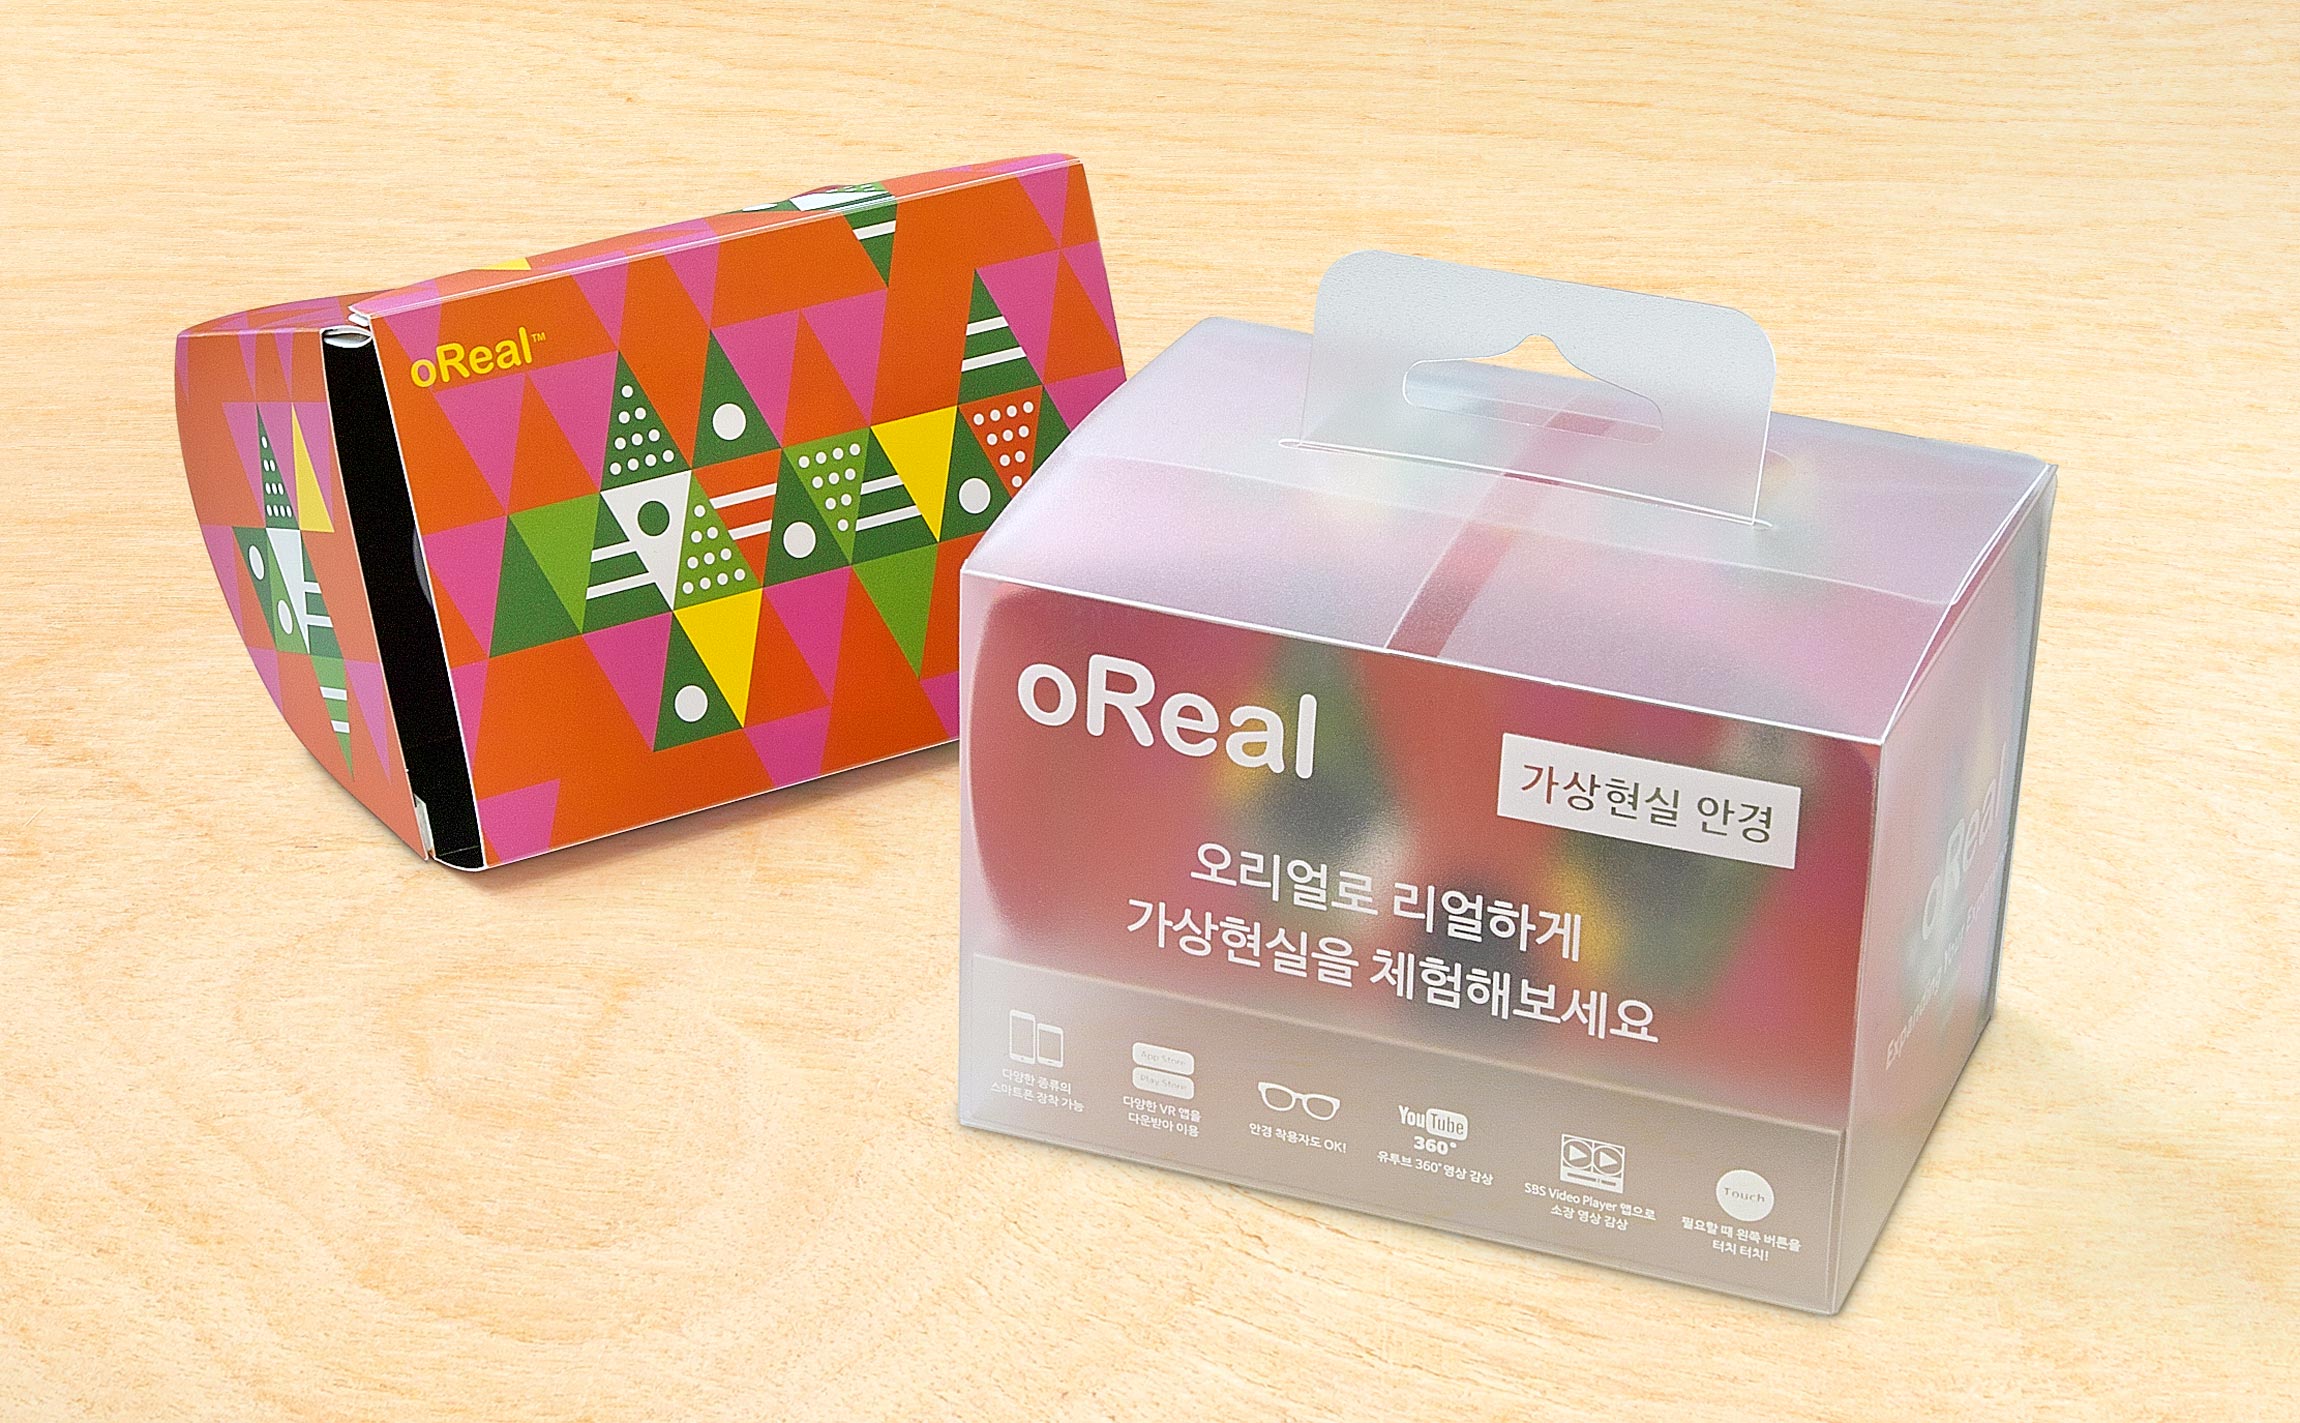 oReal VR Glass Virnect Packaging & Product oreal-glass-7.jpg